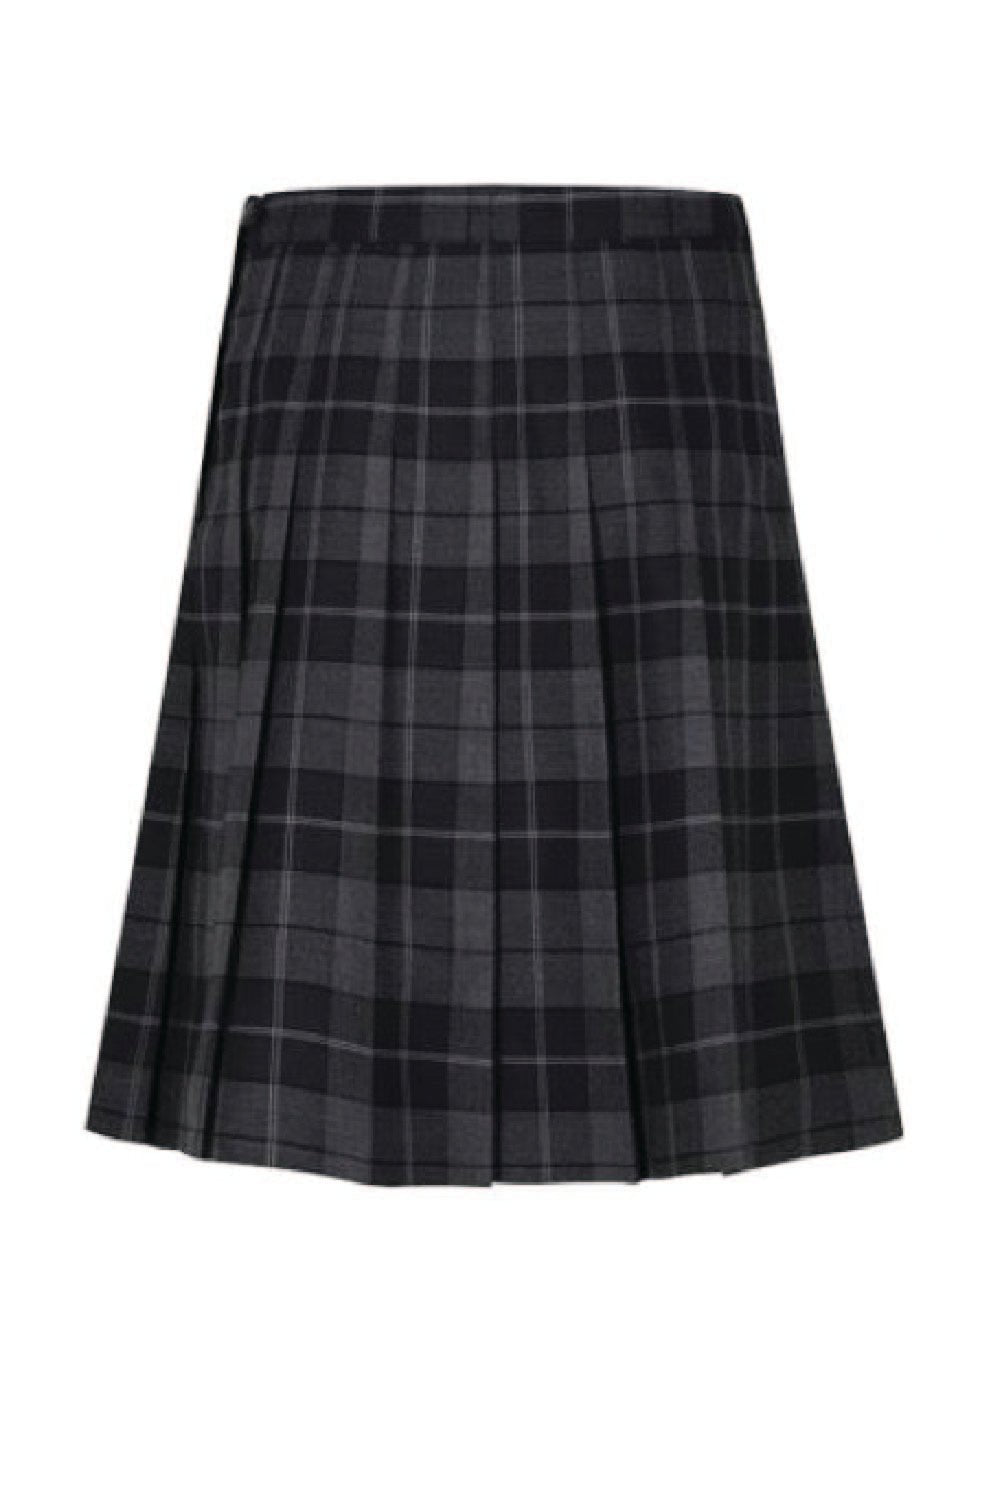 Gable Hall Custom School Skirt - Uniformwise Schoolwear